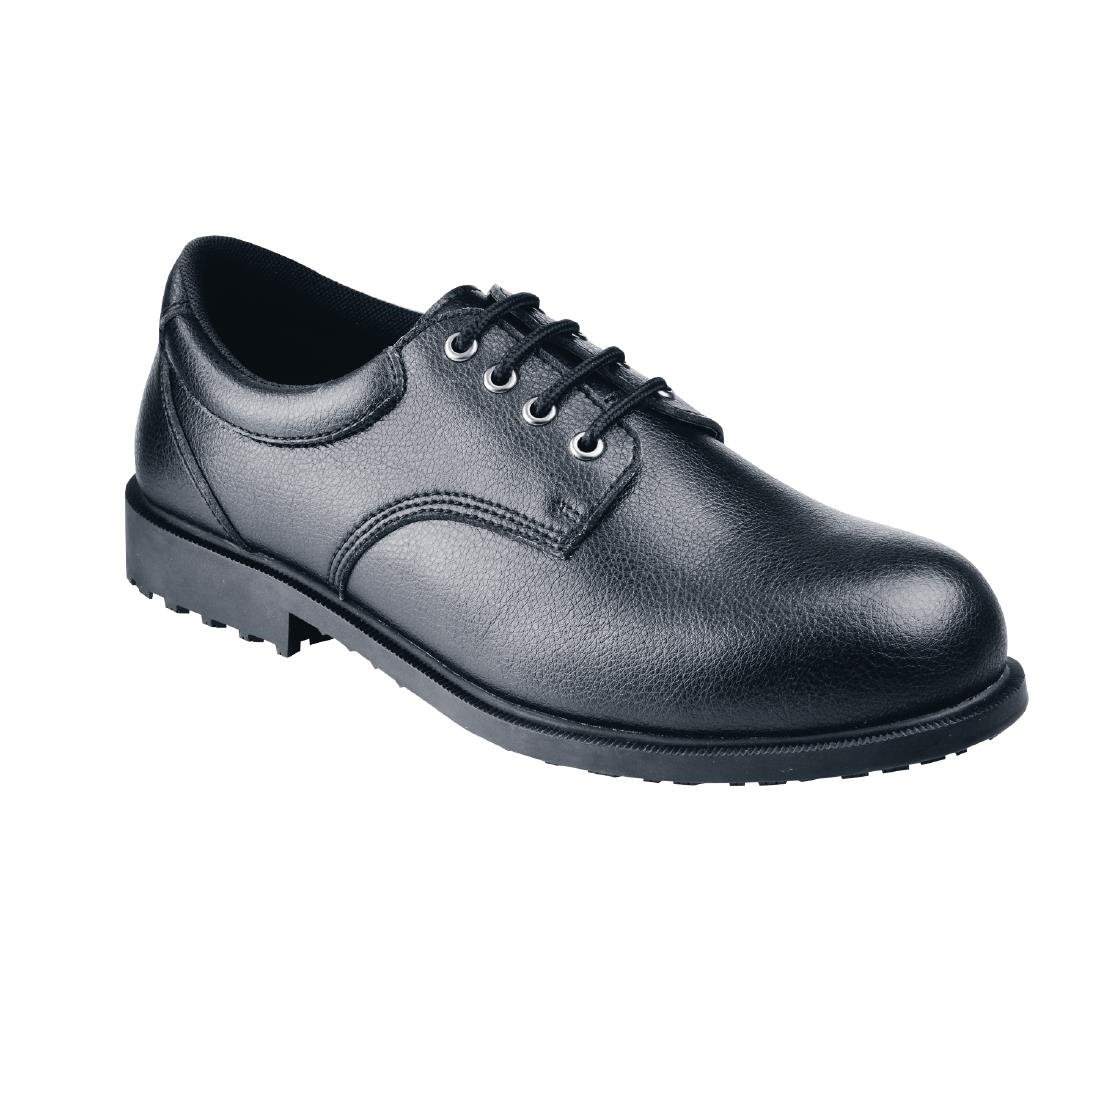 BB611-42 Shoes for Crews Cambridge Steel Toe Dress Shoe Size 42